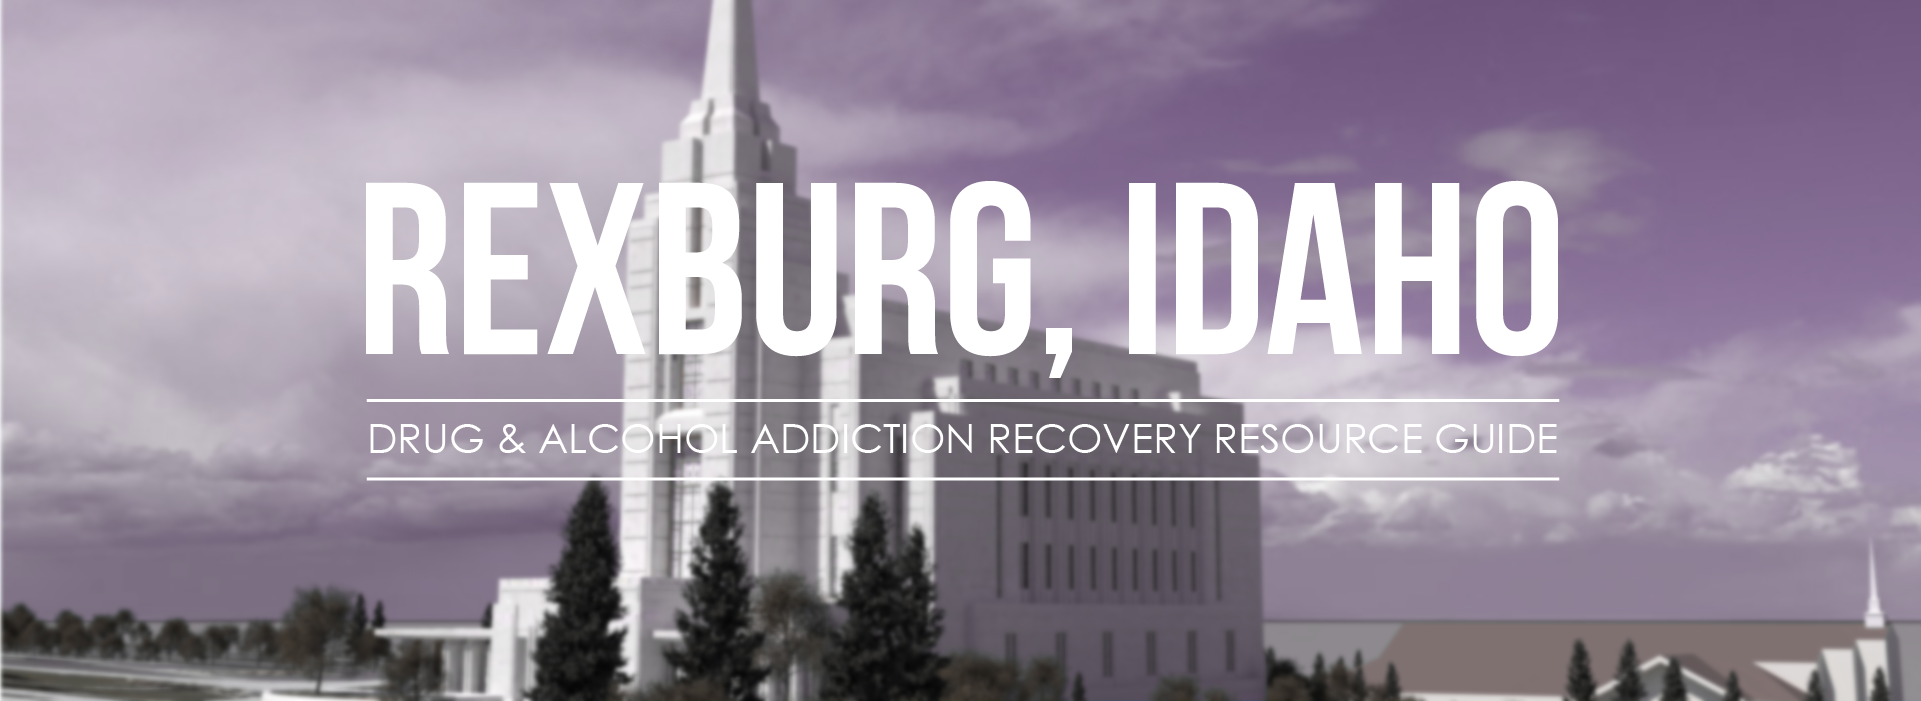 Rexburg, Idaho. Drug and alcohol addiction recovery resource guide